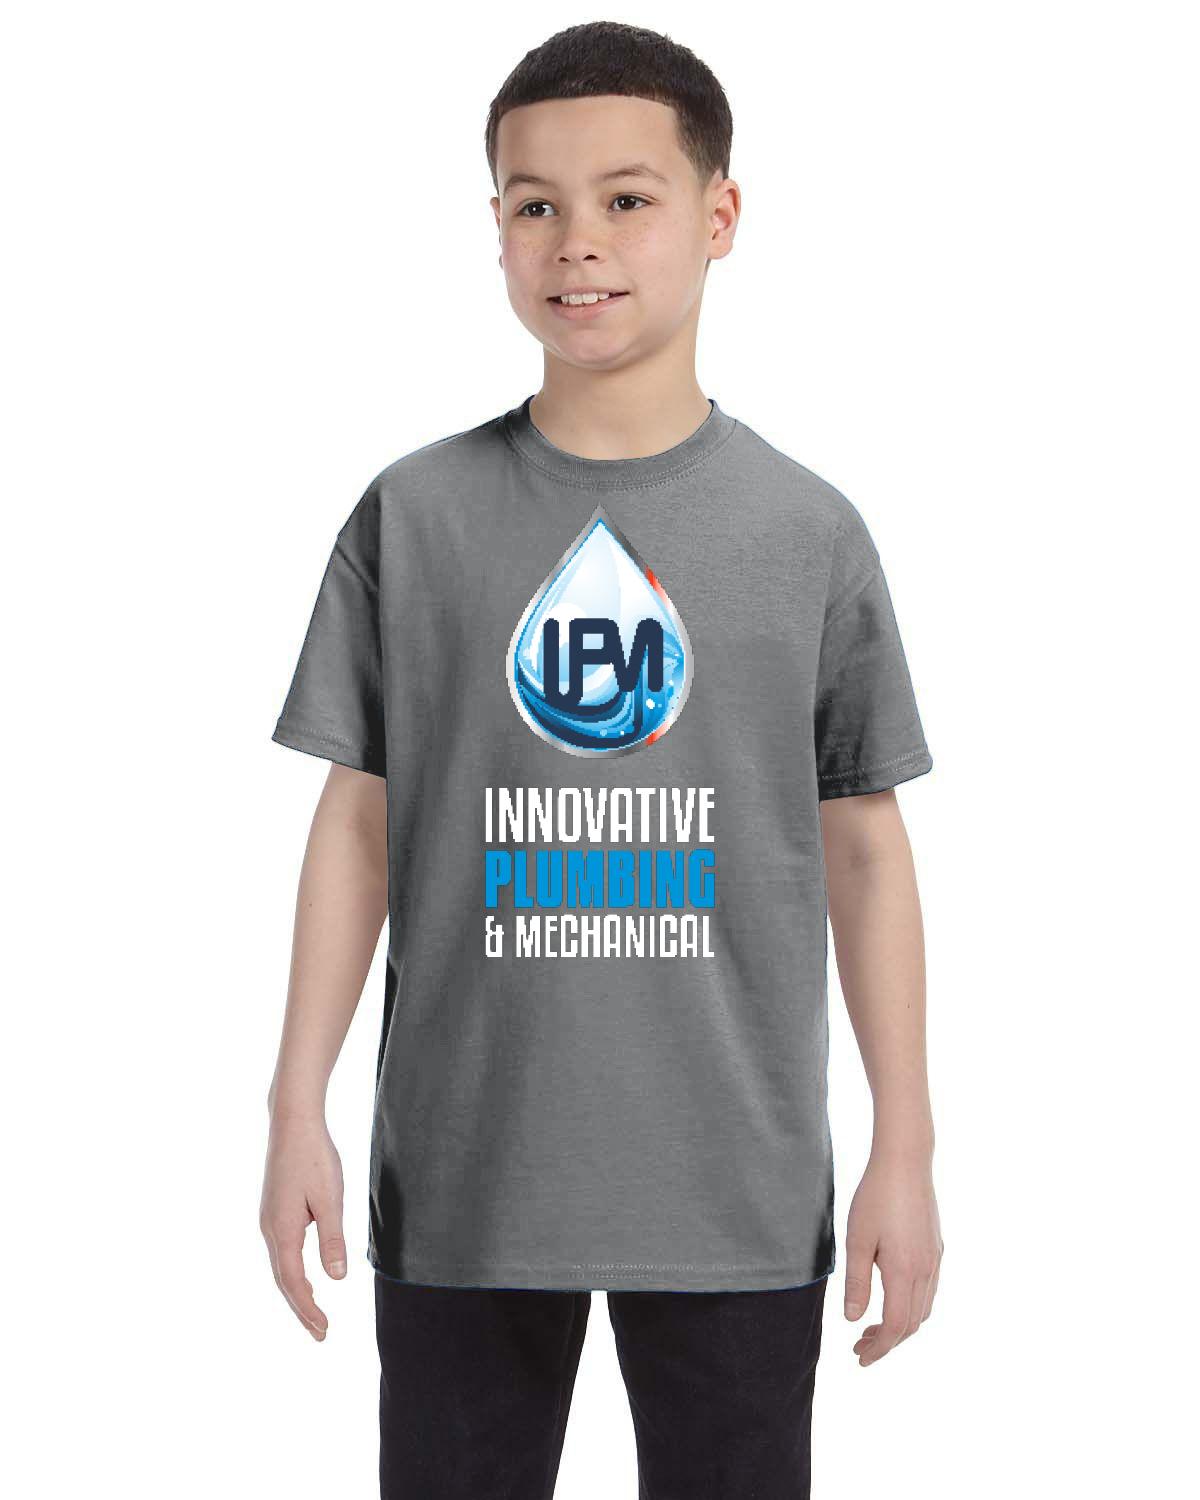 Innovative Plumbing and Mechanical Kid's T-Shirt